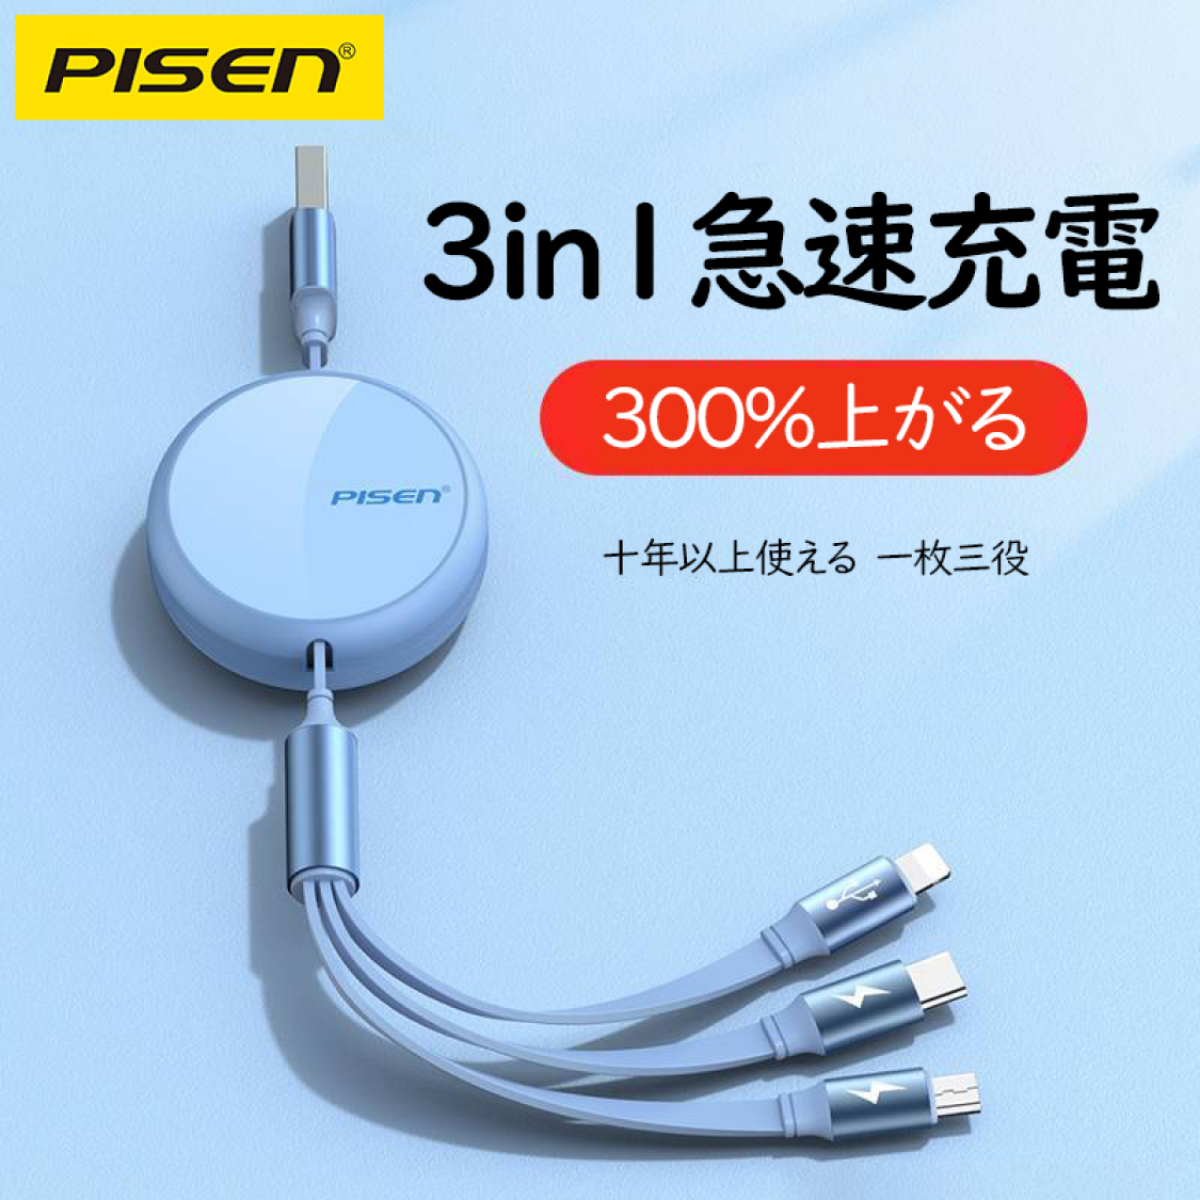 PISEN 3in1巻き取り式充電ケーブル 3in1 3A｜一枚三役｜伸縮自在｜ポップアップしない｜急速充電|undefined